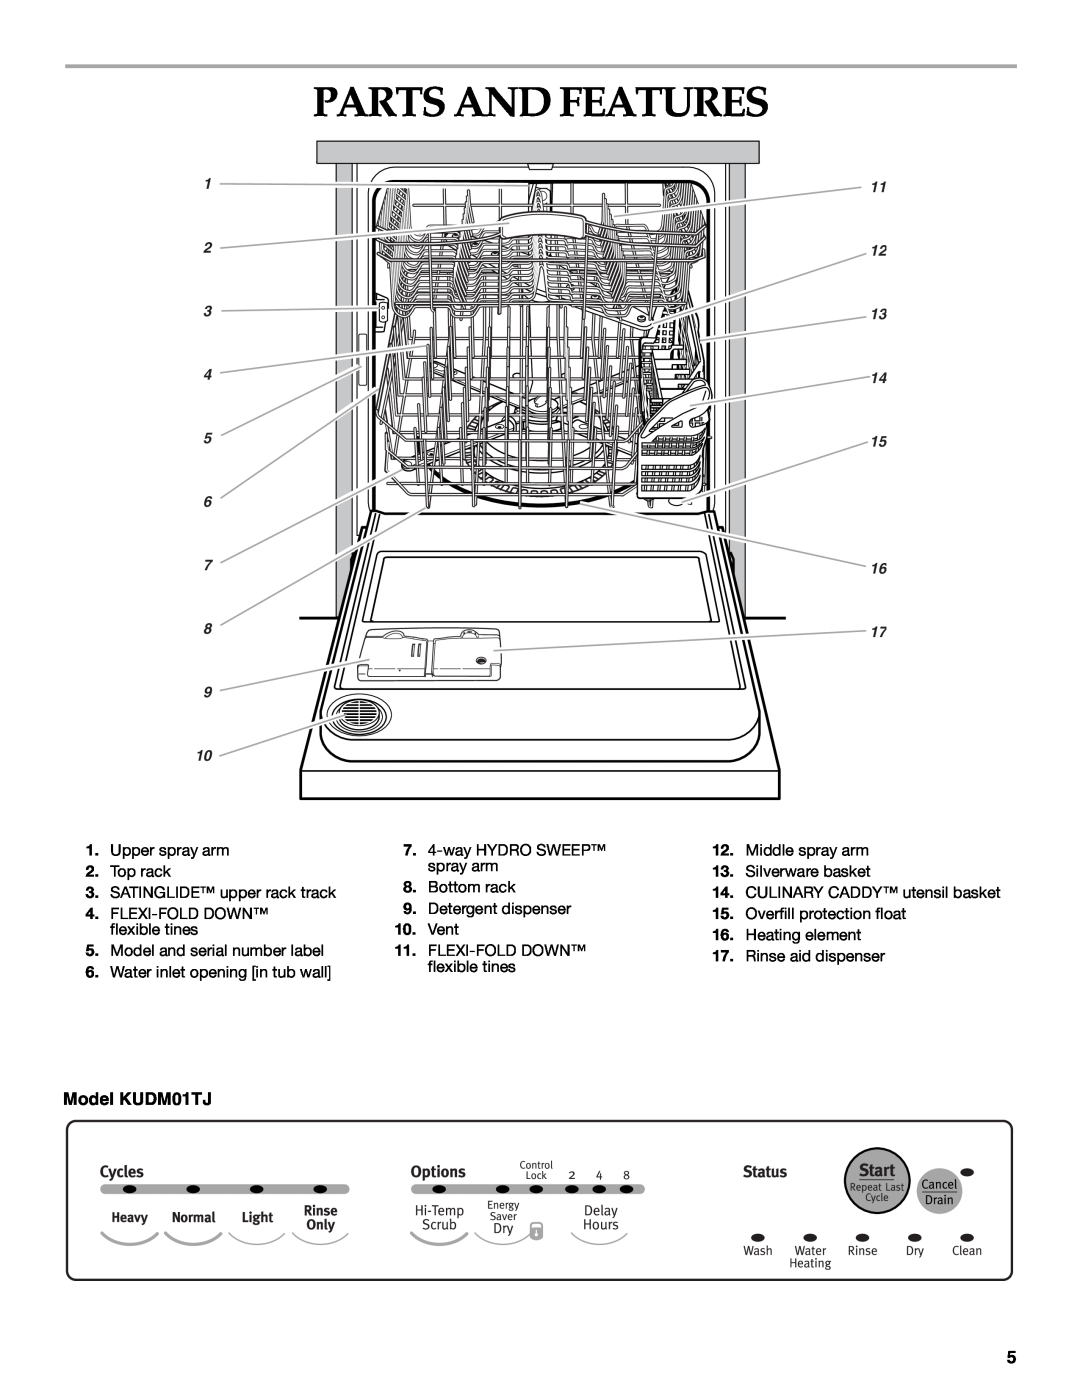 KitchenAid manual Parts And Features, Model KUDM01TJ 